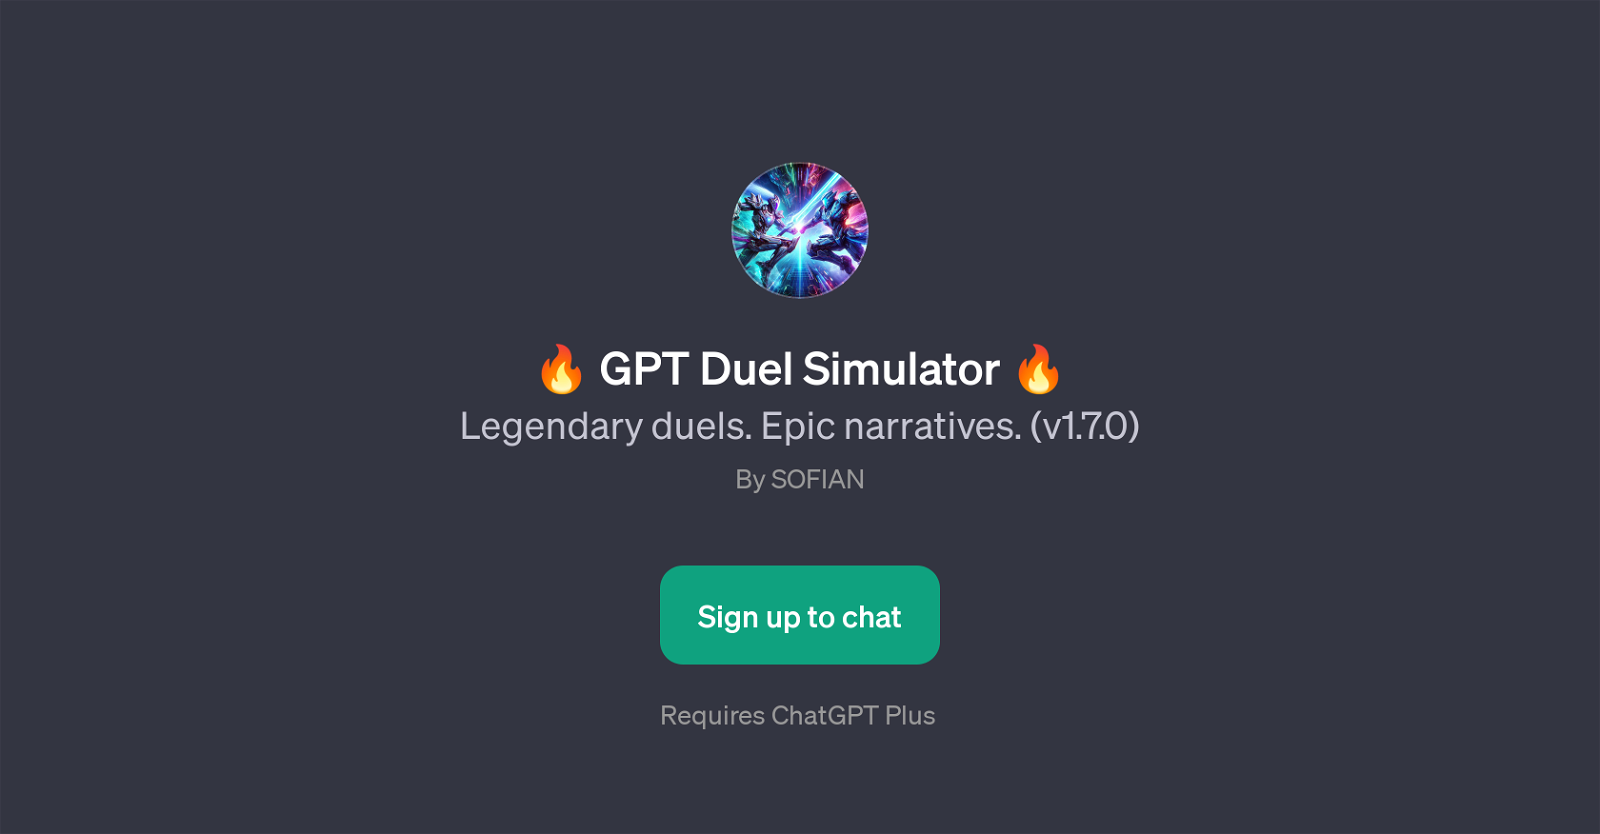 GPT Duel Simulator website